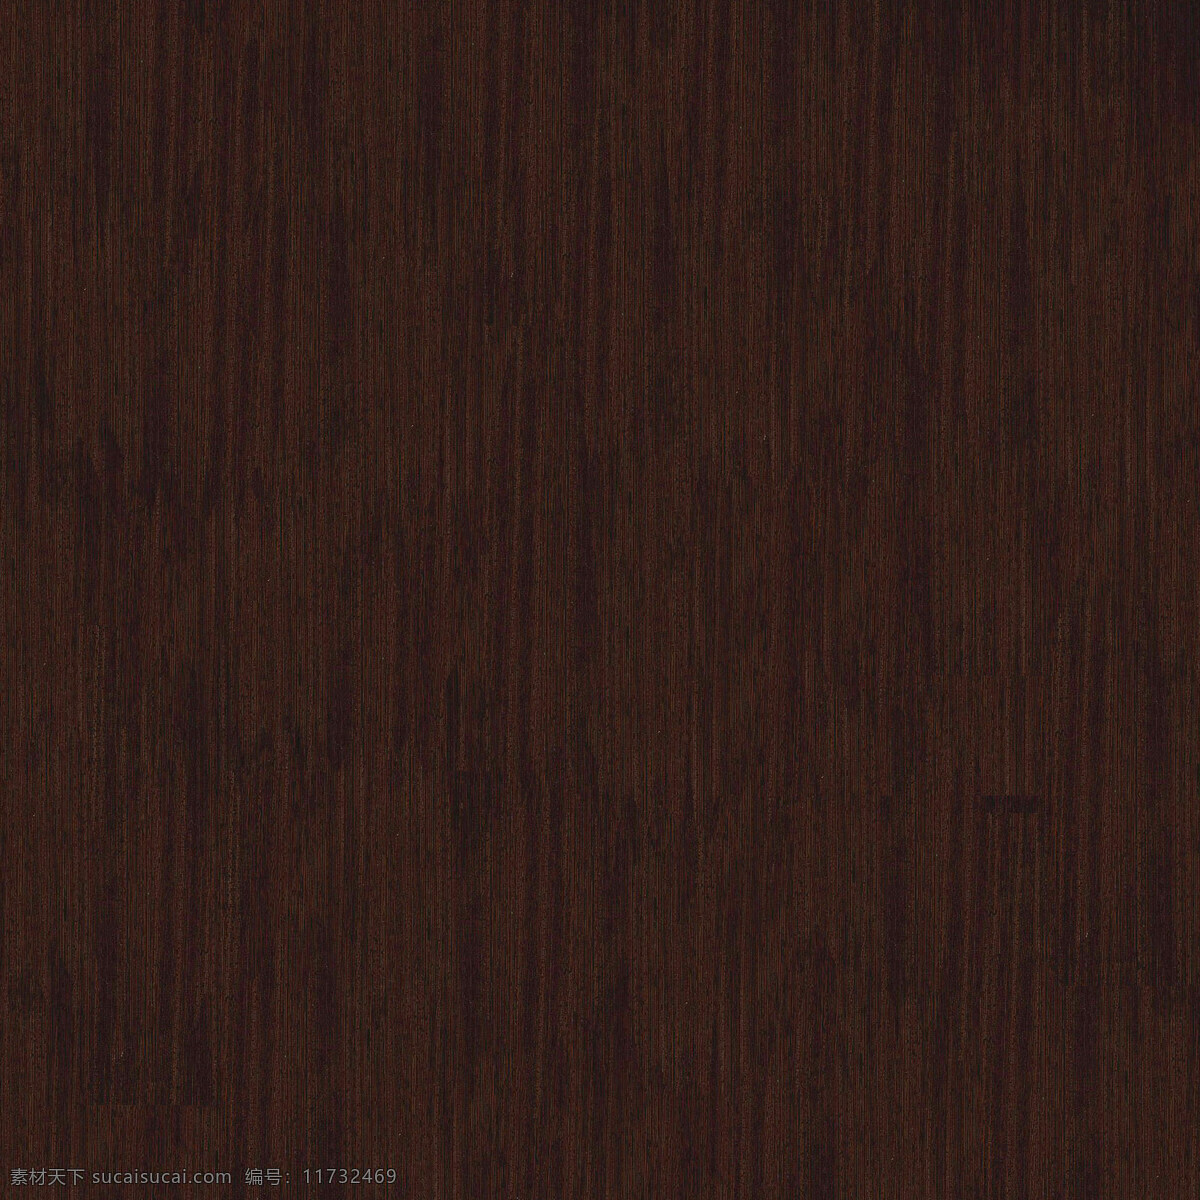 vray 木纹 材质 max9 光滑 木材 深褐色 有贴图 抛光 3d模型素材 材质贴图